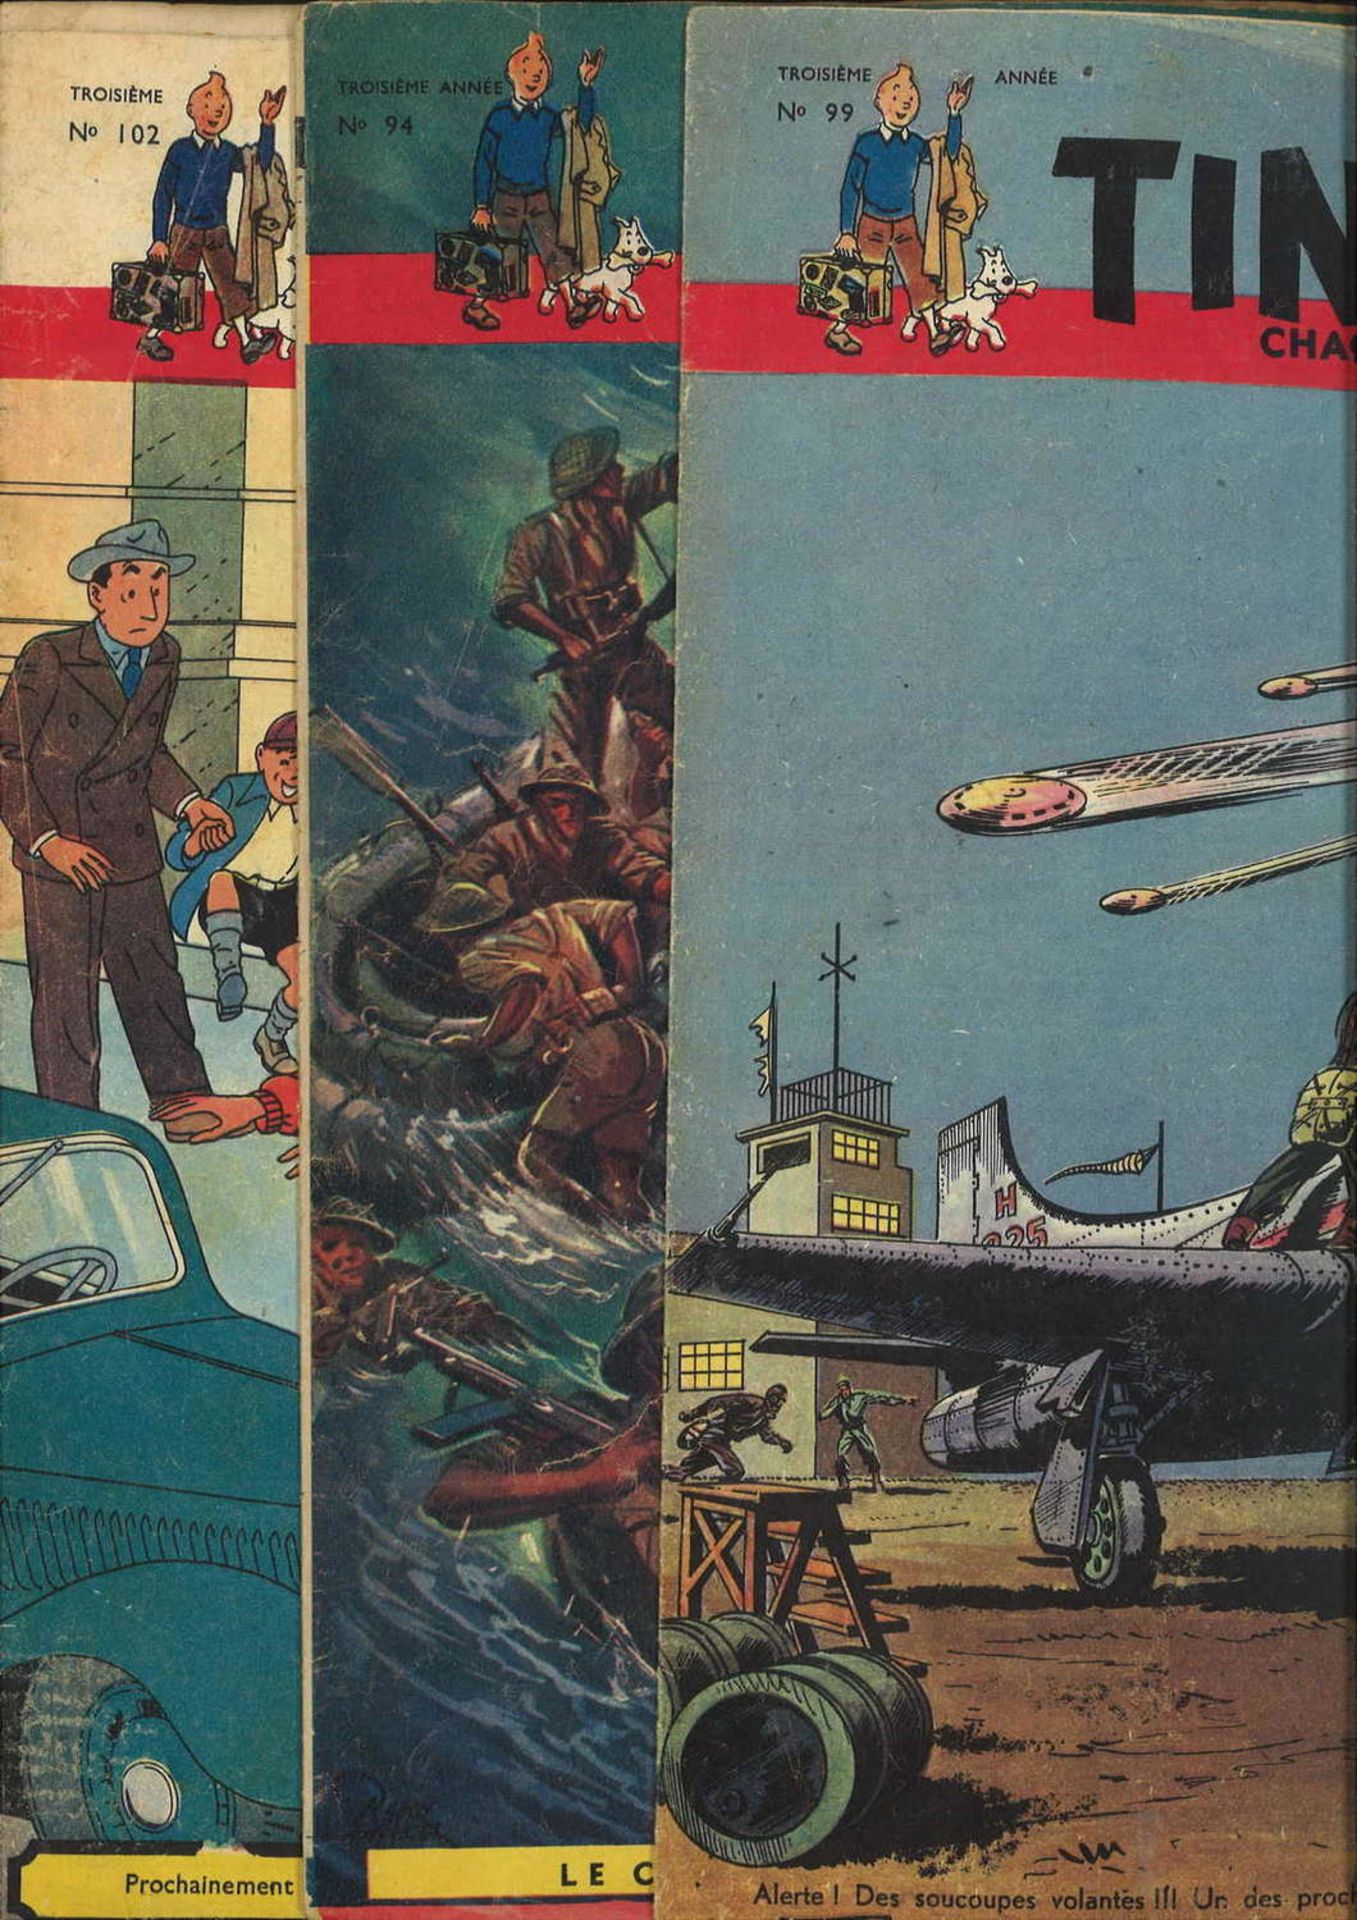 3 comic "Tintin - Chaque Jeudi", here No. 94 - 10 Aout 1950, No. 99 - 14 September 1950 and No.